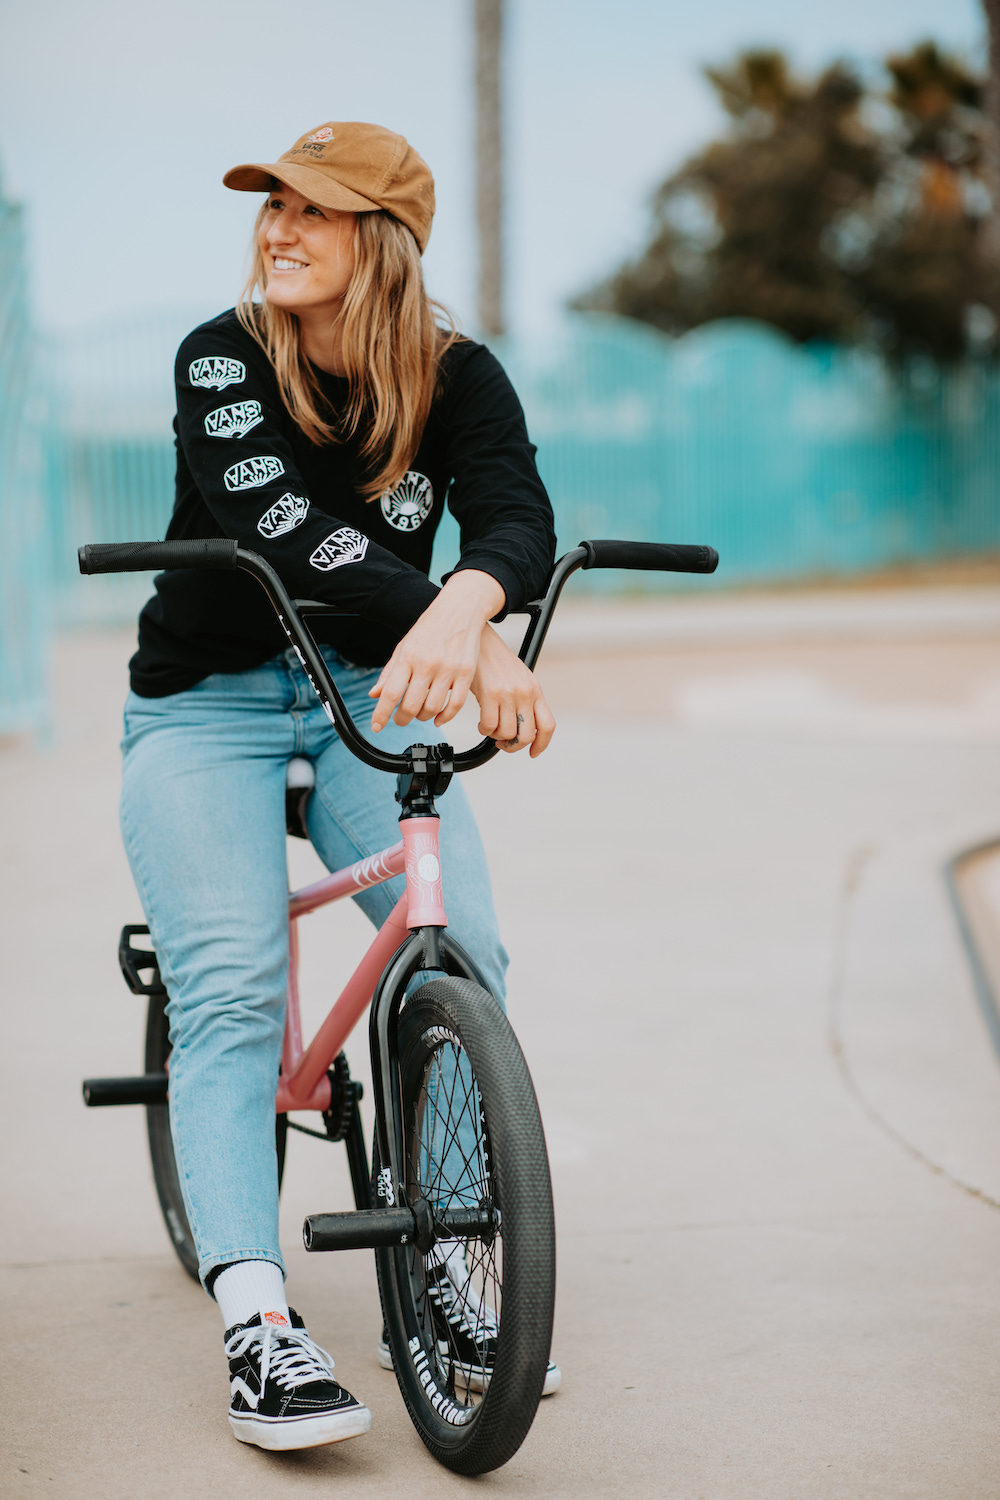 San Diego skater fashion featuring pro BMX cyclist Angie Marino on her bike in Robb Field Skate Park, Ocean Beach